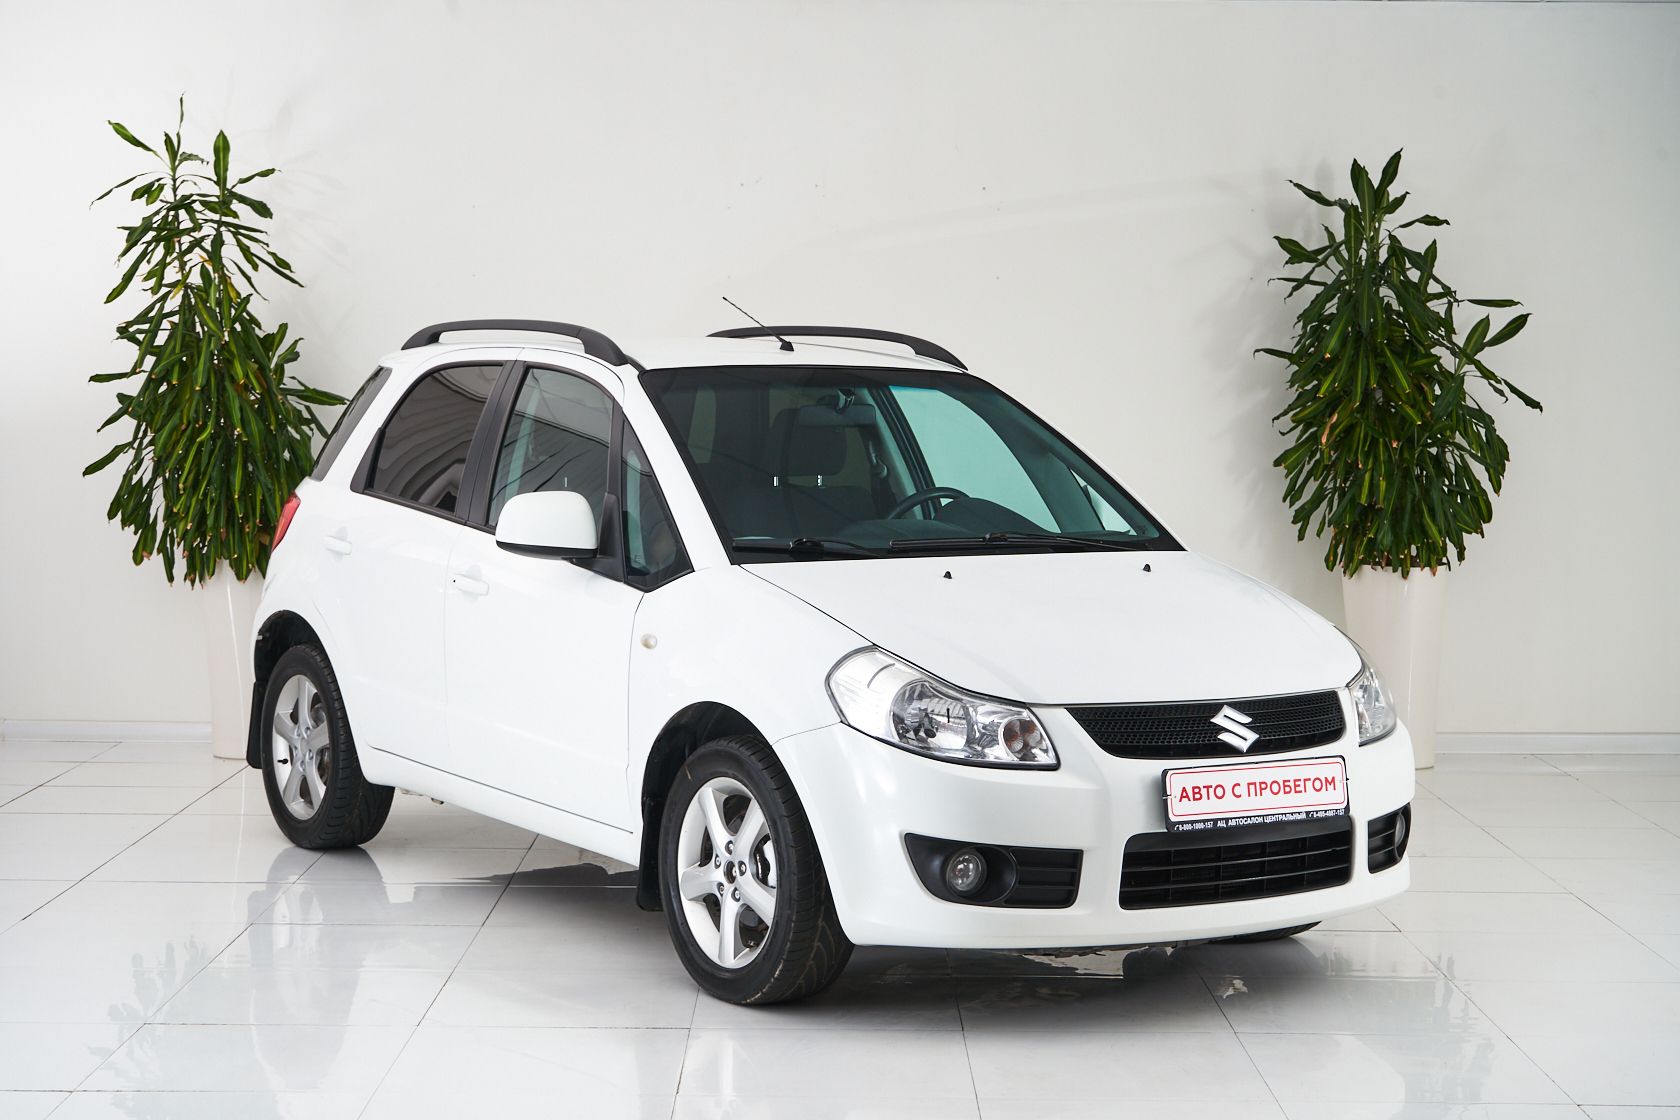 2009 Suzuki Sx4 I №5560648, Белый, 399000 рублей - вид 3